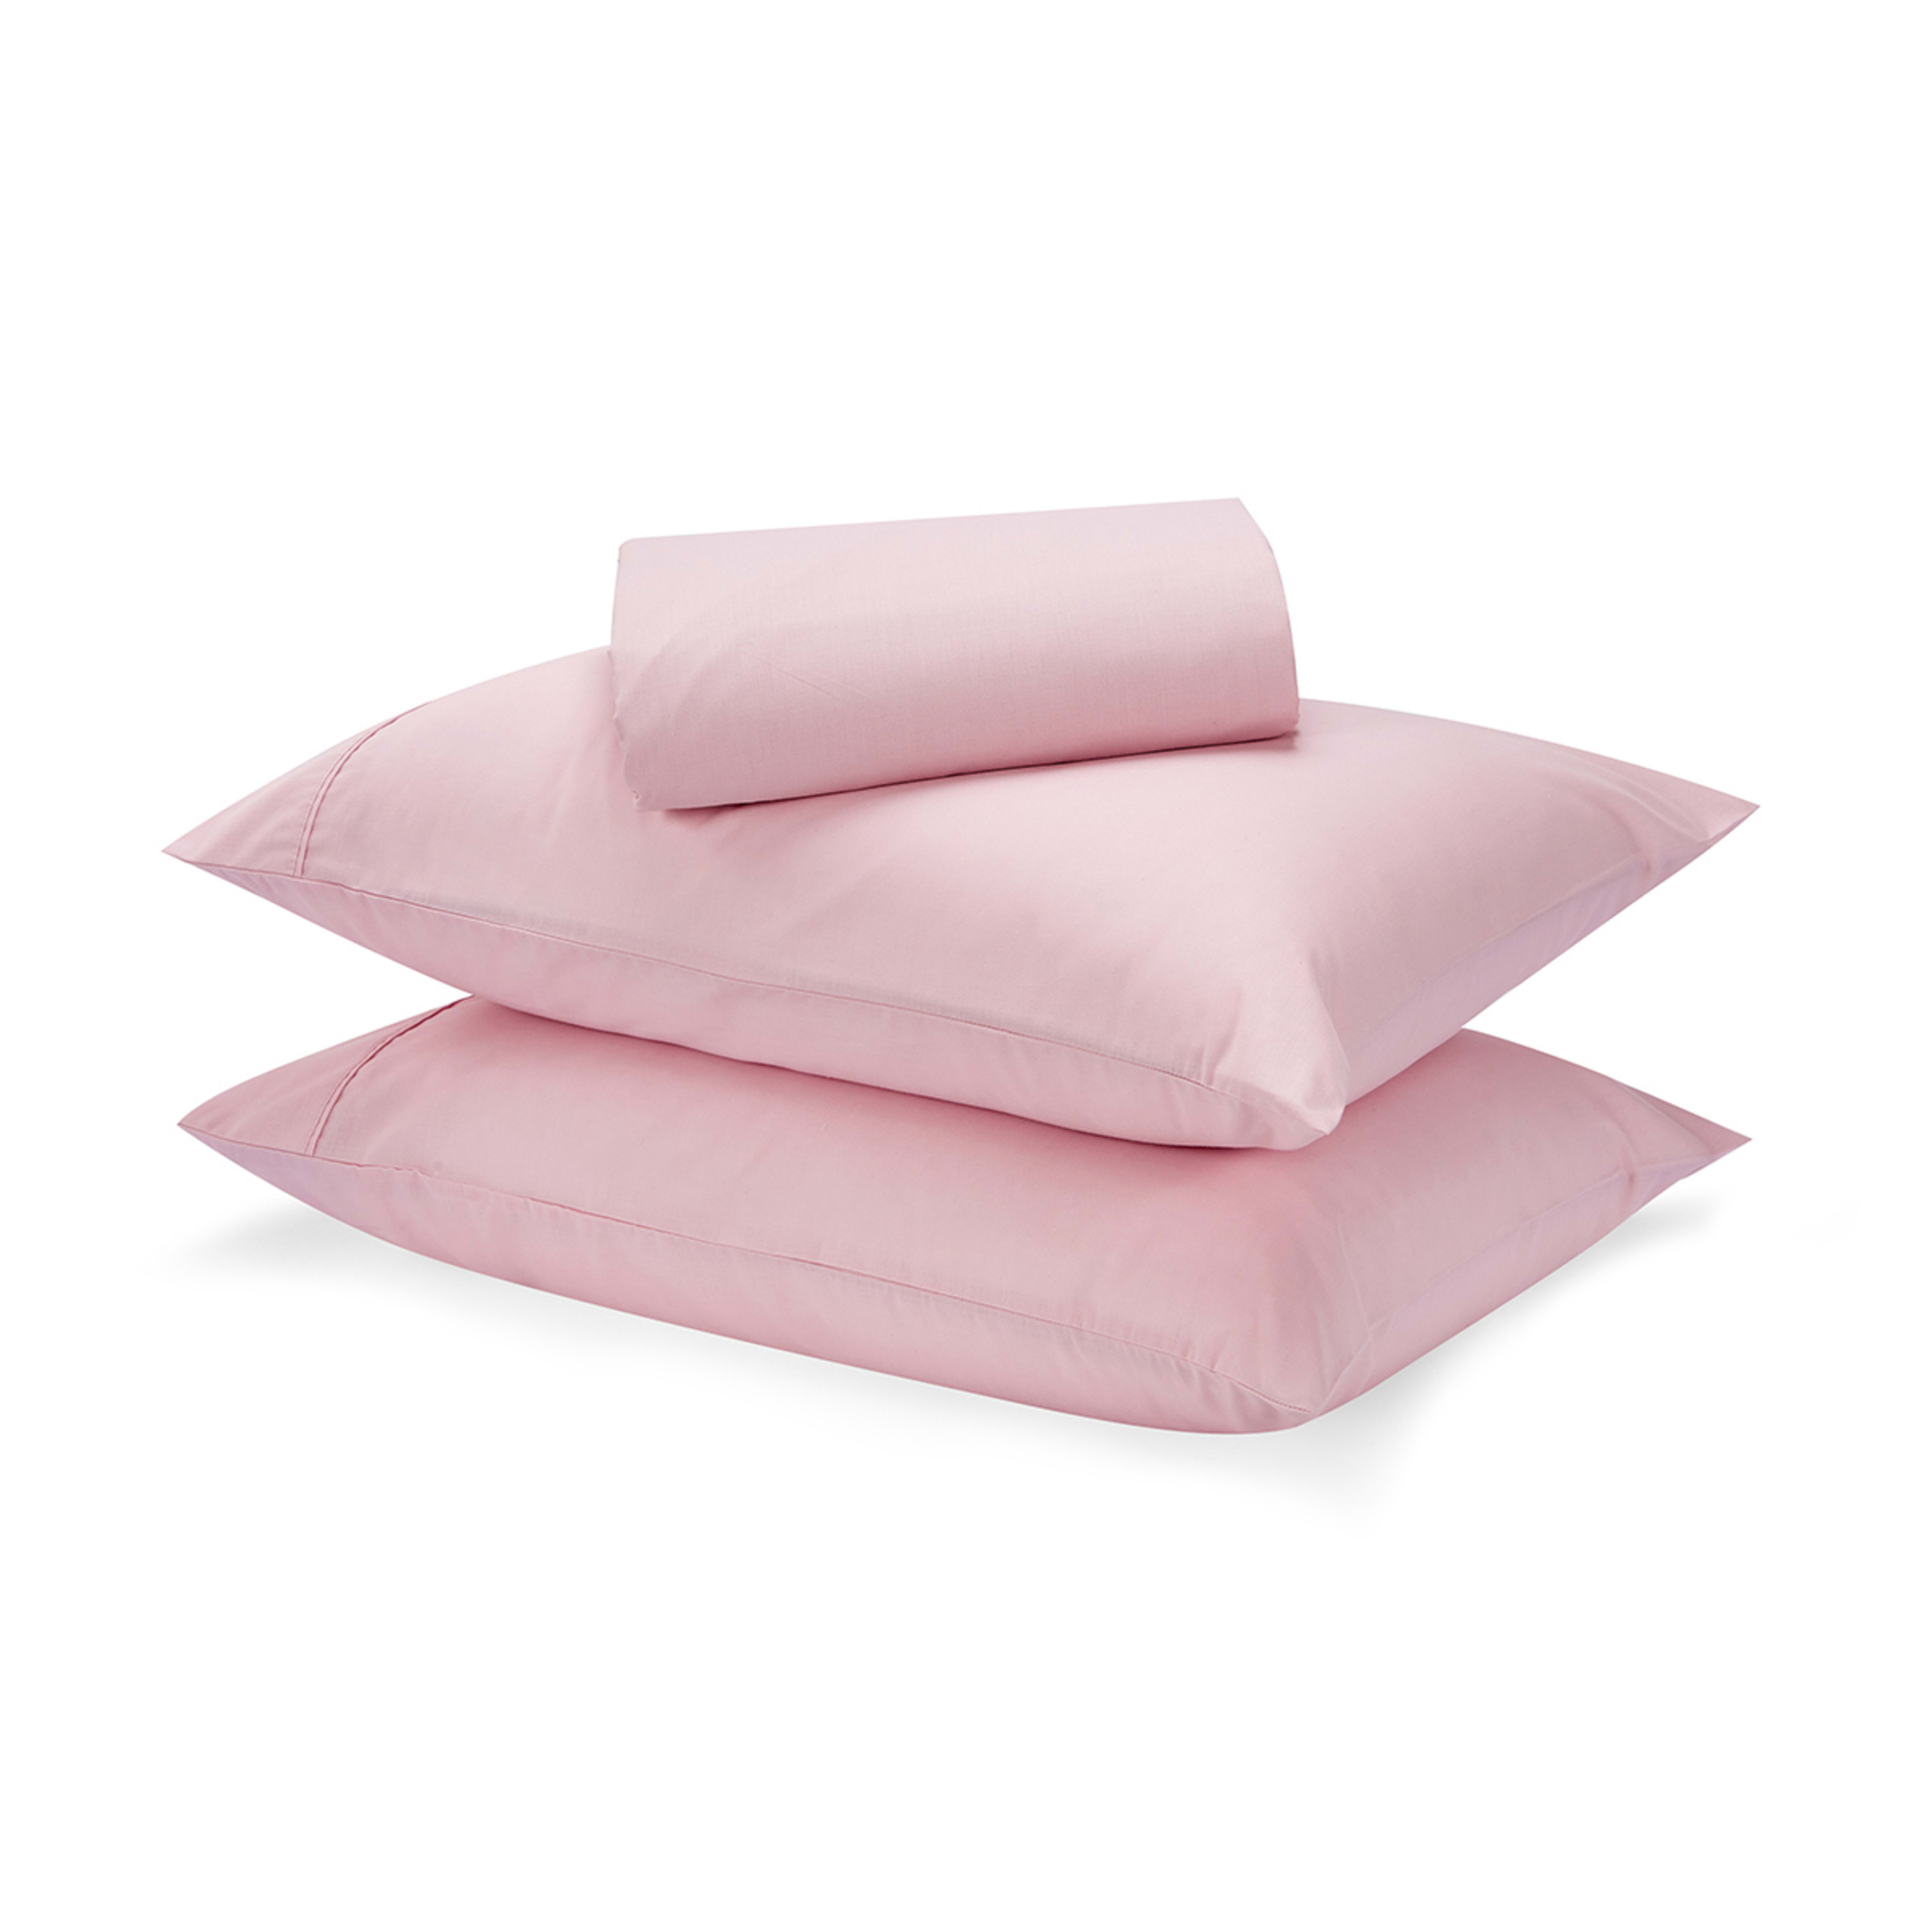 180 Thread Count Sheet Set - Queen Bed, Pink